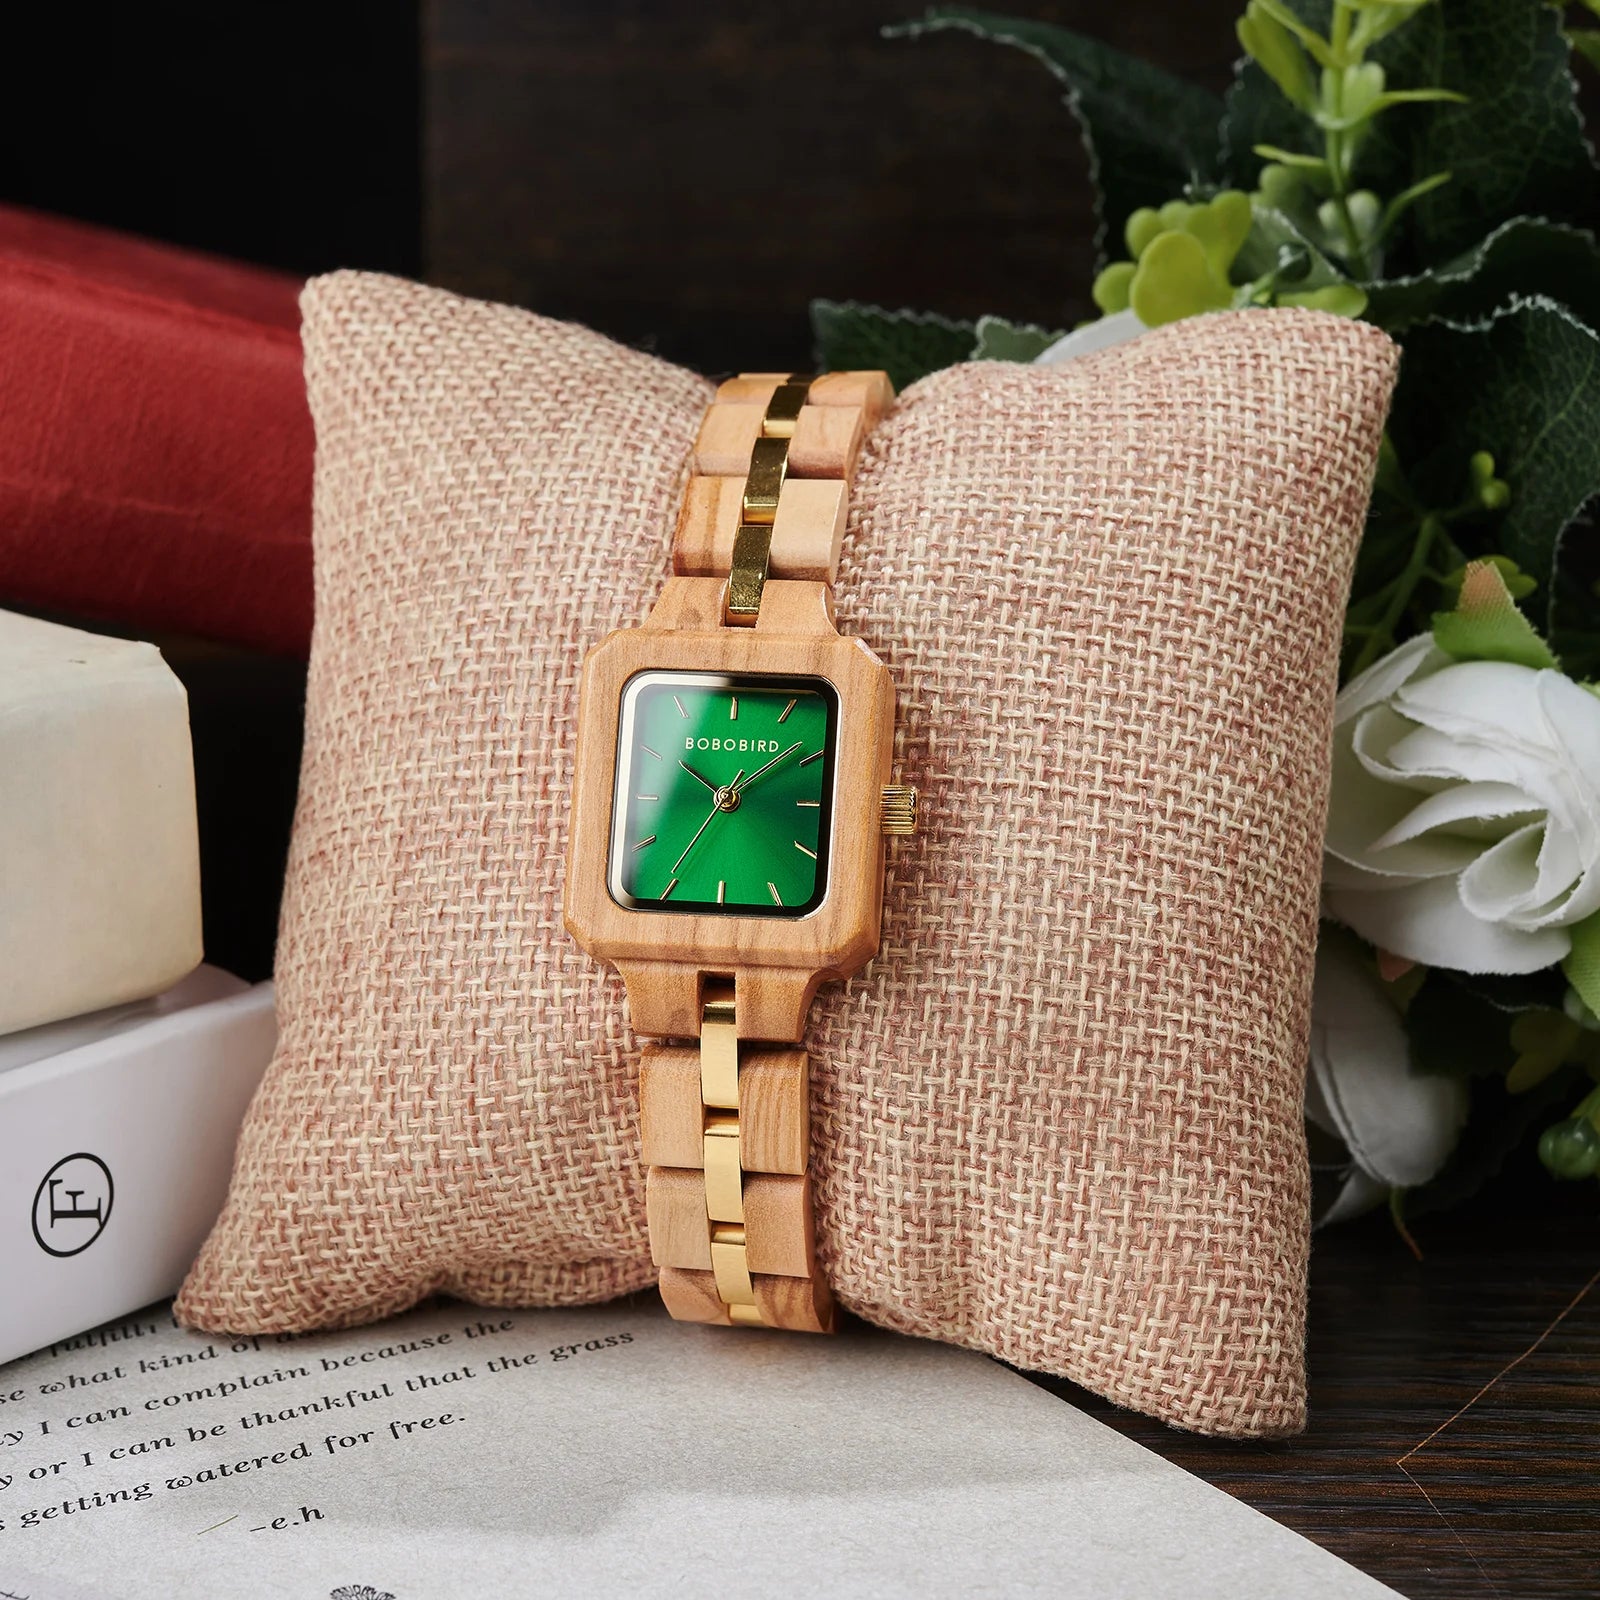 BOBO BIRD Wood Watch Women Quartz Wristwatch New Design Female Simple Fashion Watch Personalized Engraved Gift Box Reloj Mujer